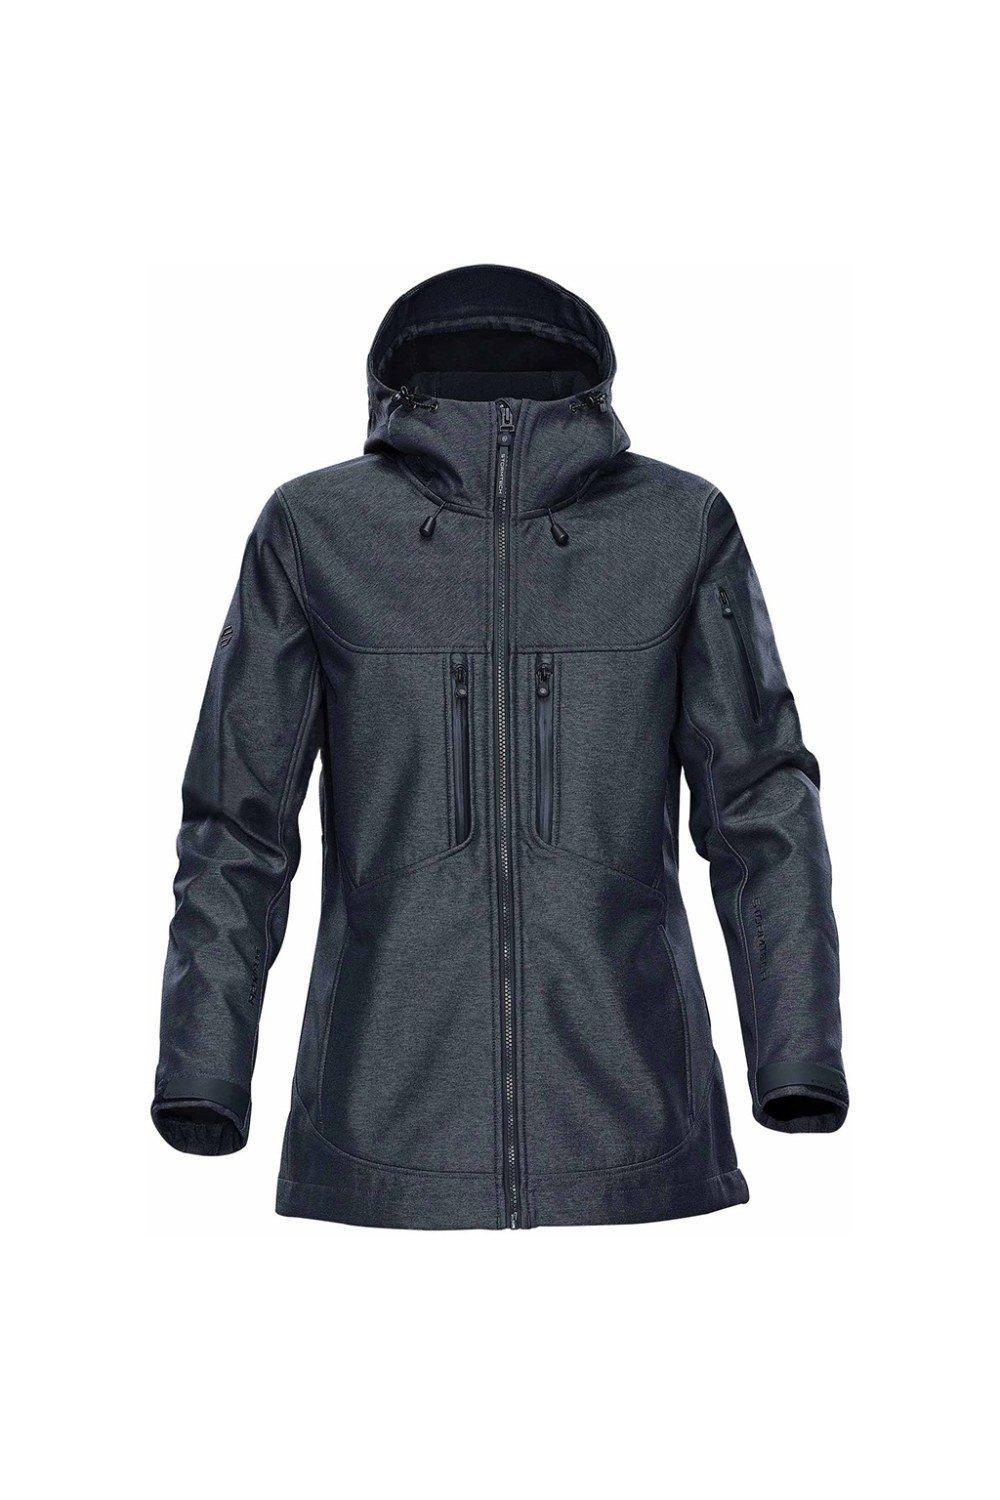 Саржевая куртка Epsilon 2 Soft Shell Stormtech, серый куртка nostromo thermal soft shell stormtech серый